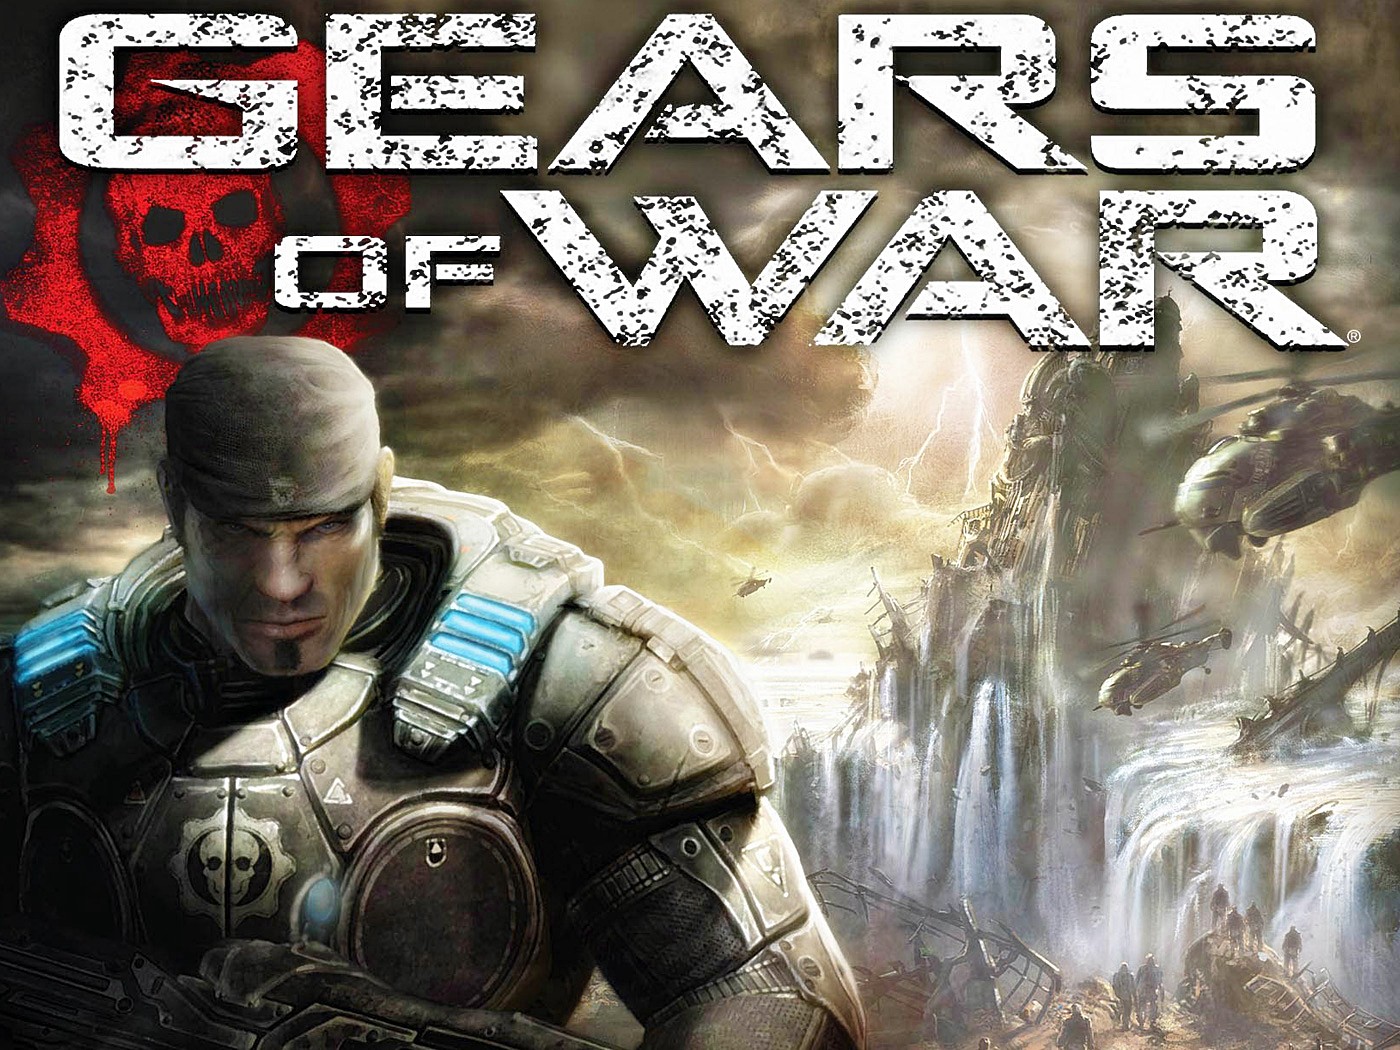 Gears of War DVD Cover Wallpapers HD Wallpapers